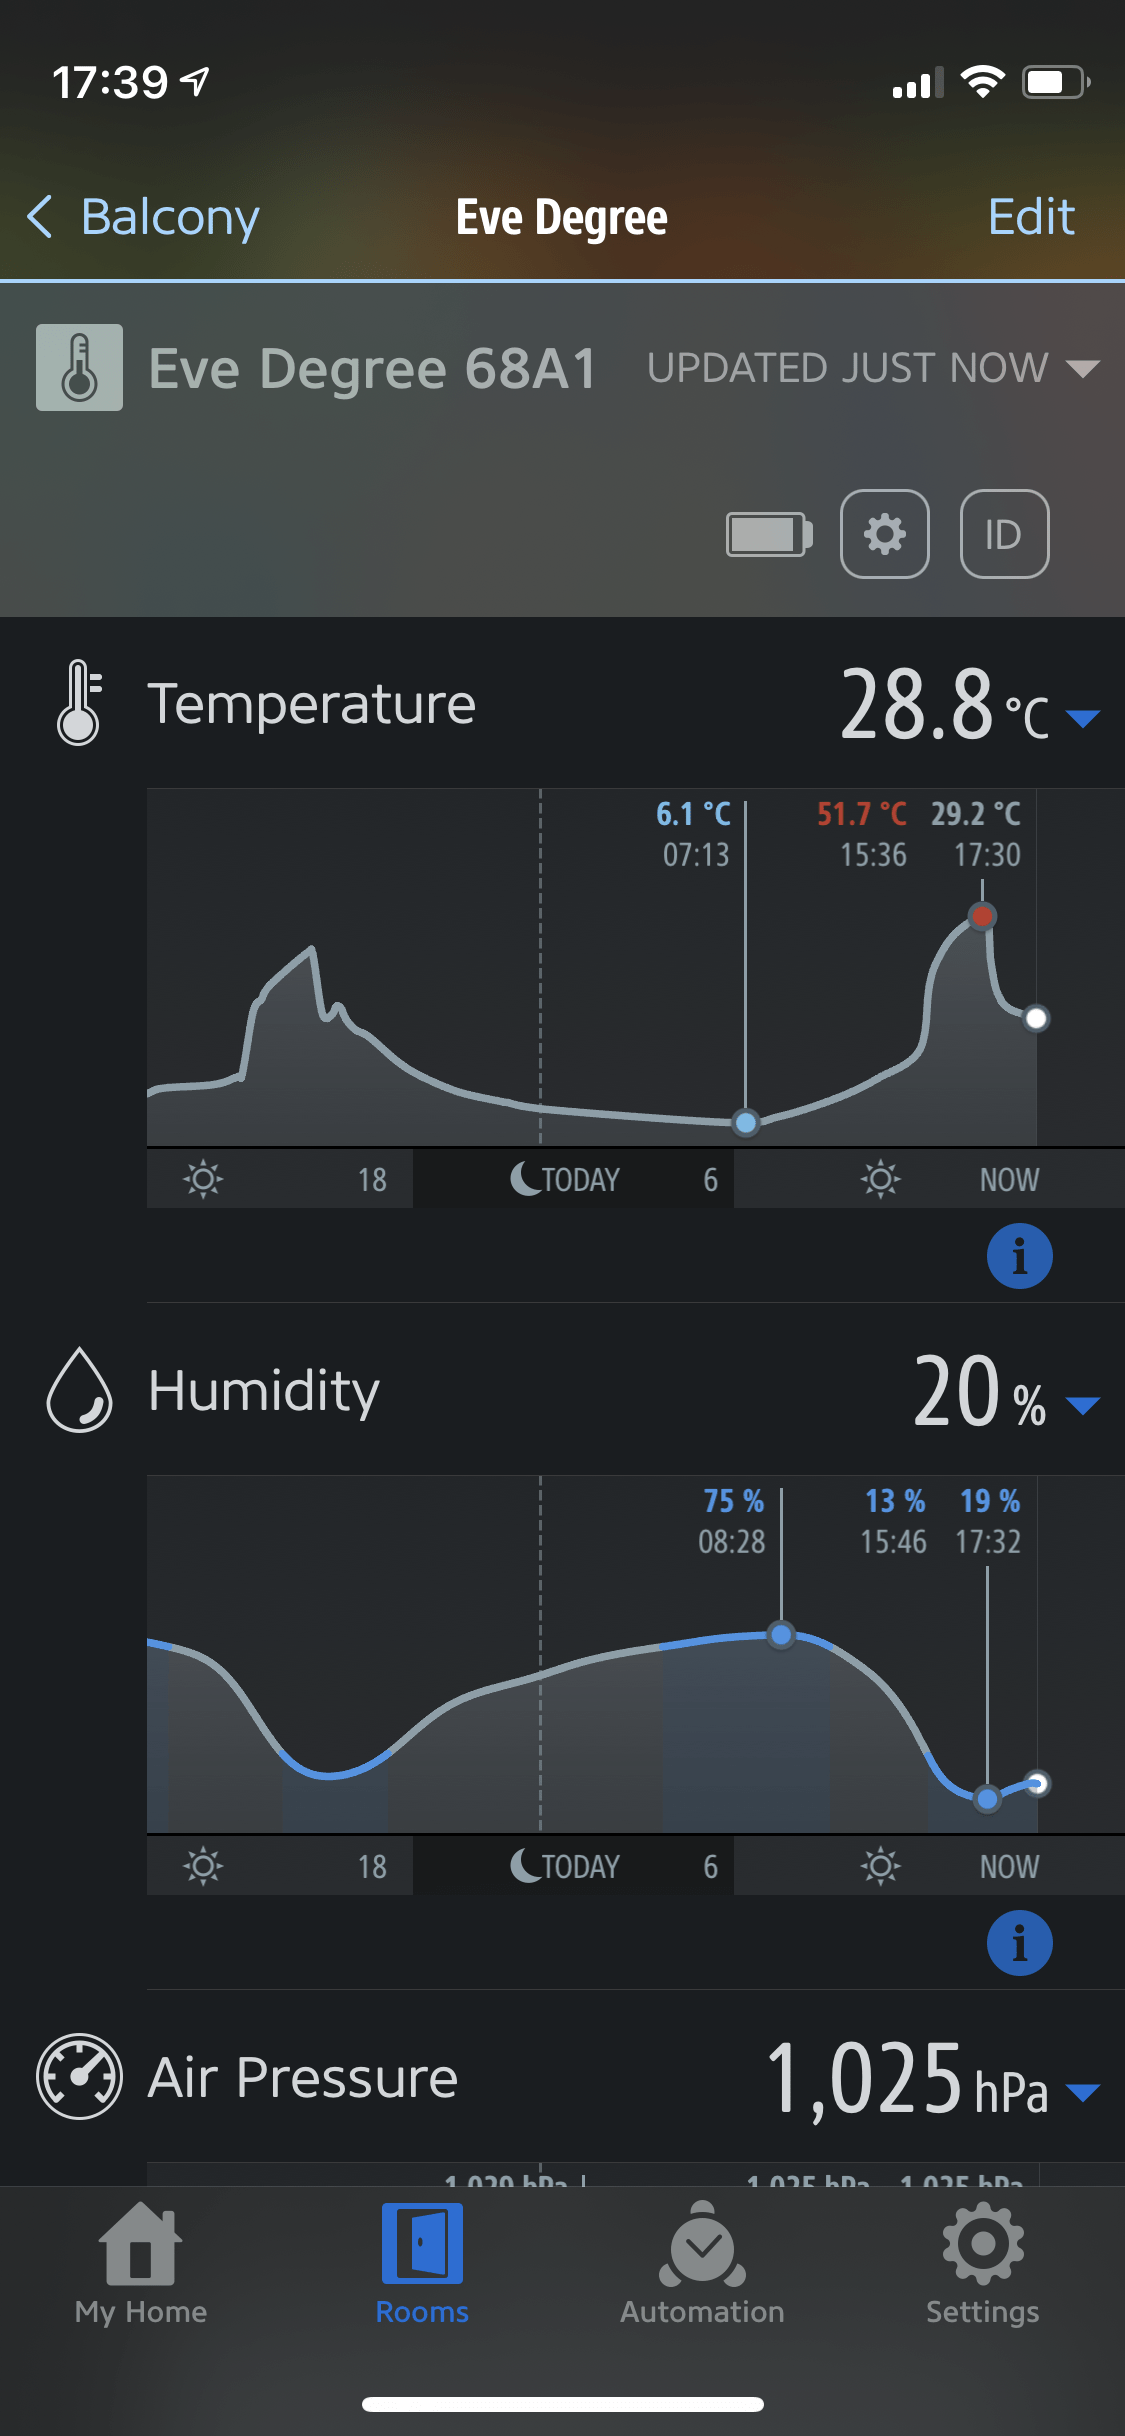 Looks like my balcony has warmed up quite a bit